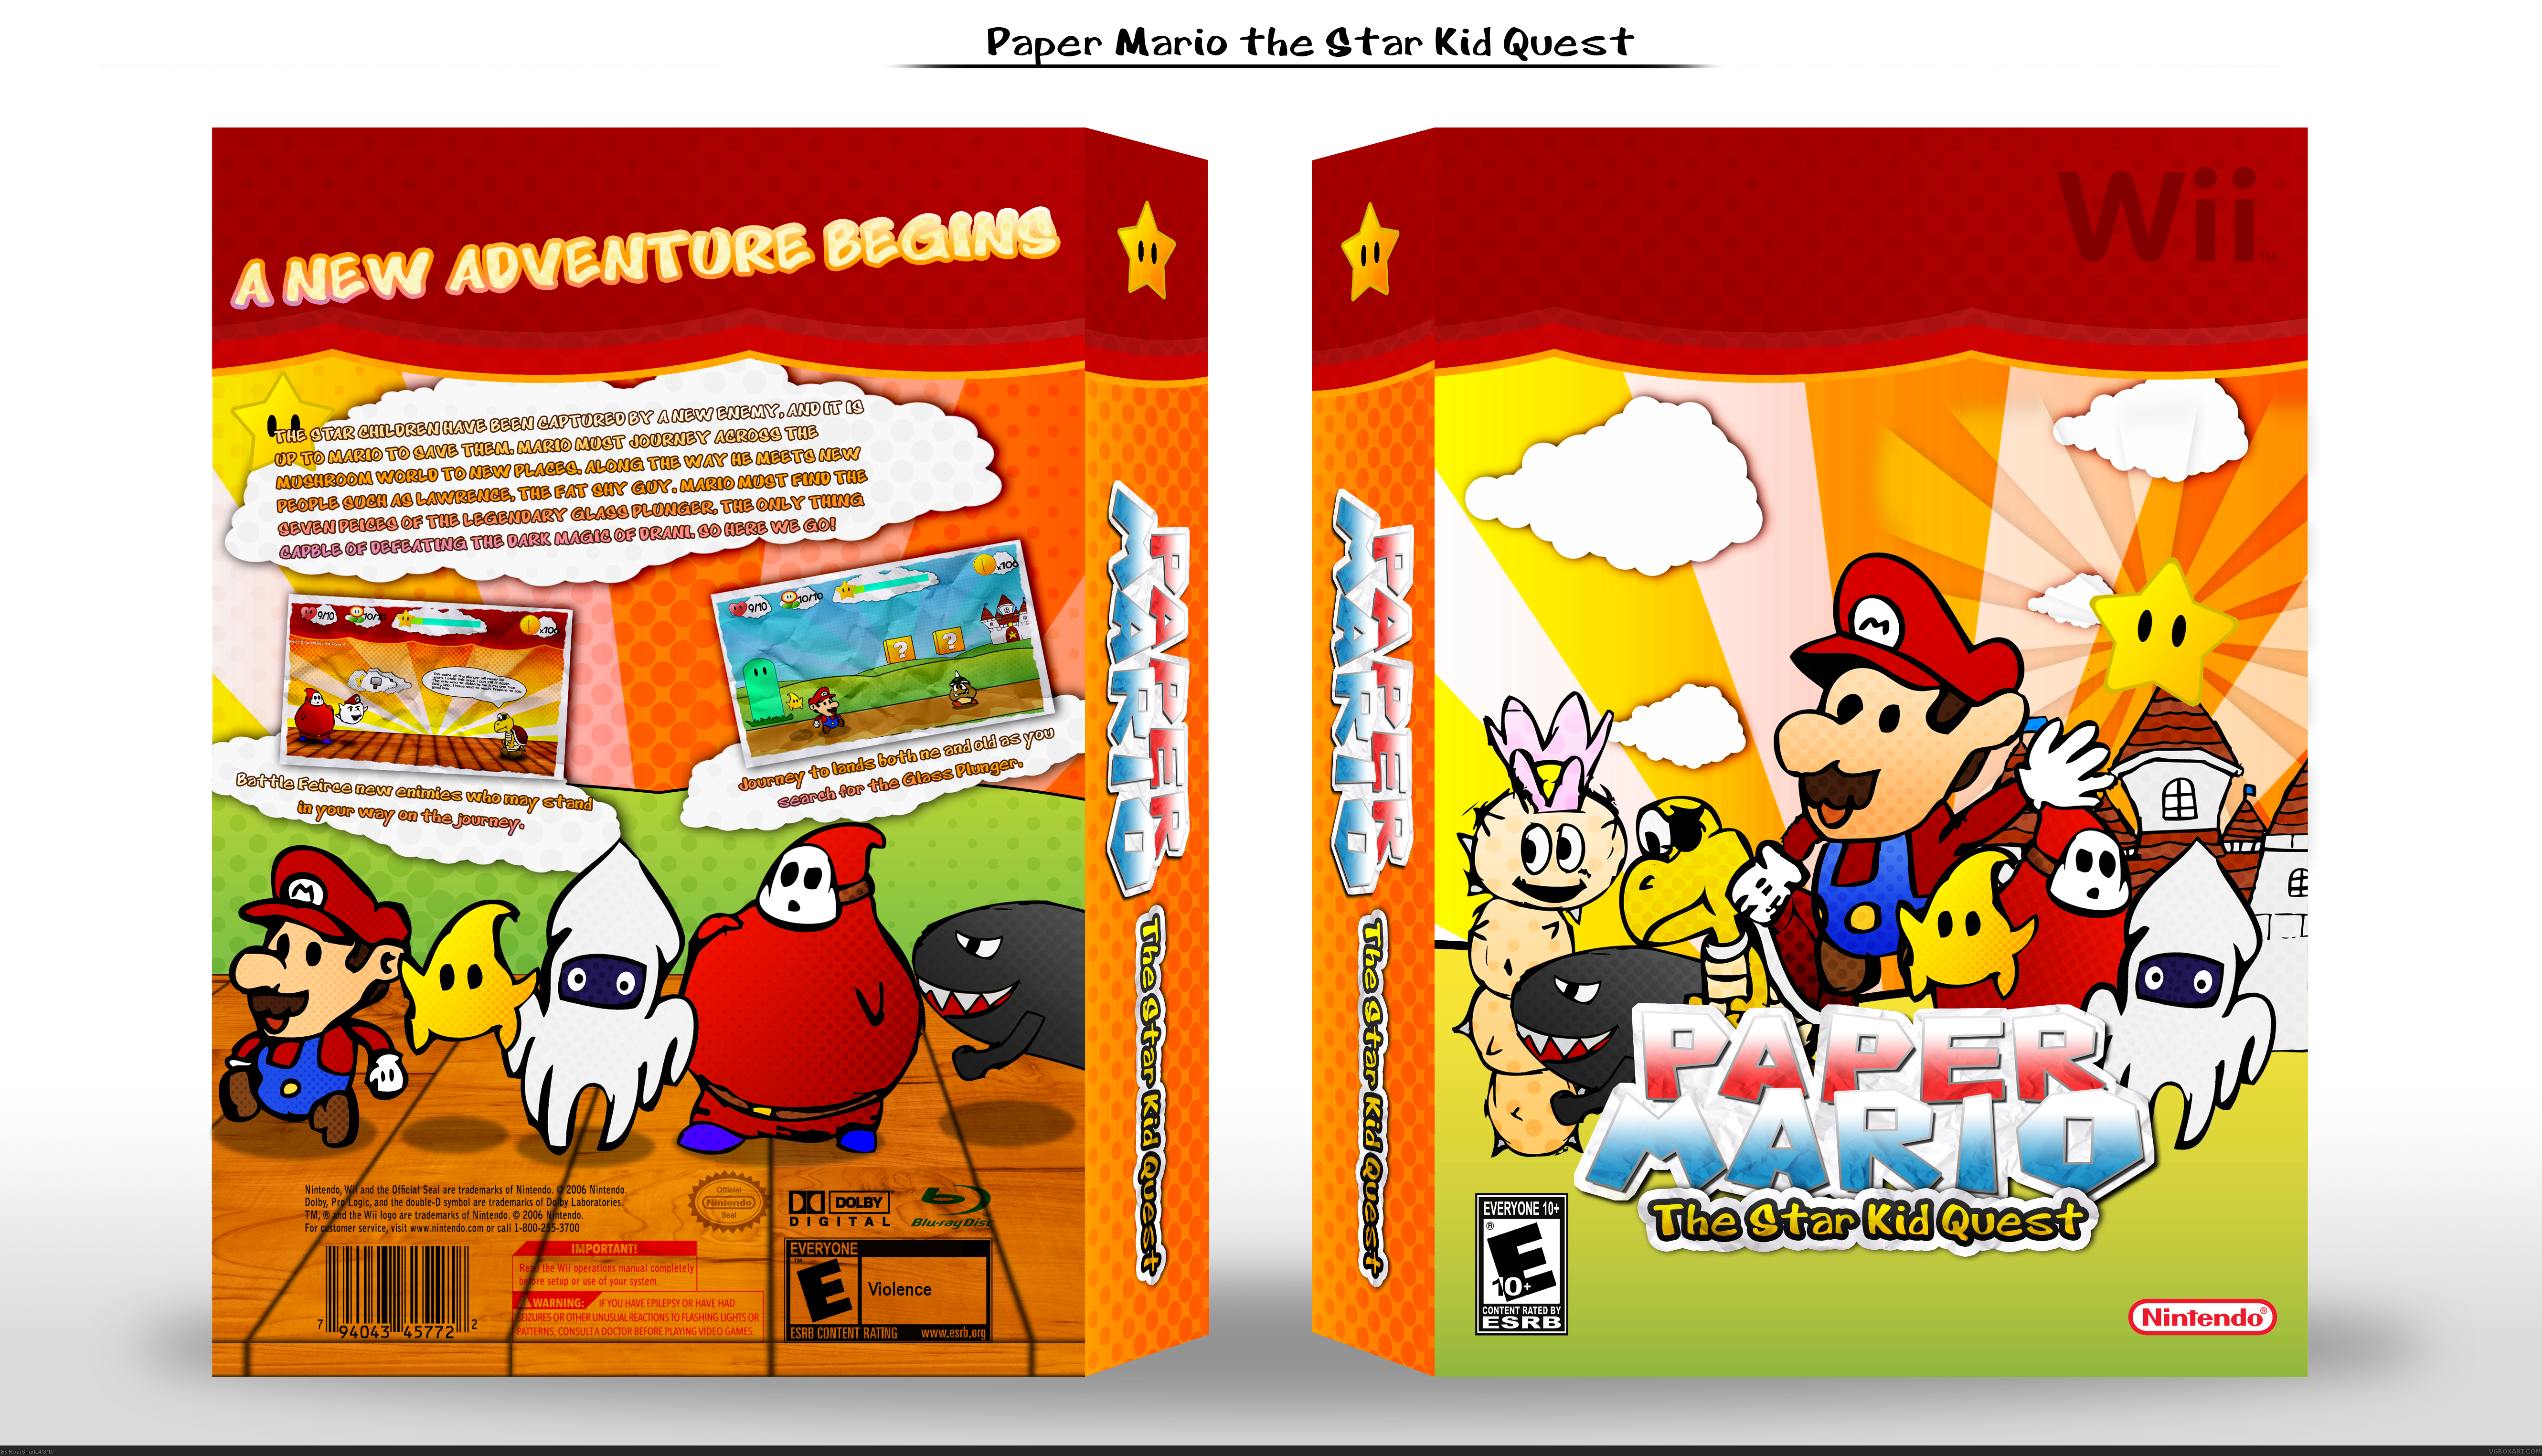 Paper Mario the Star Kid Quest box cover